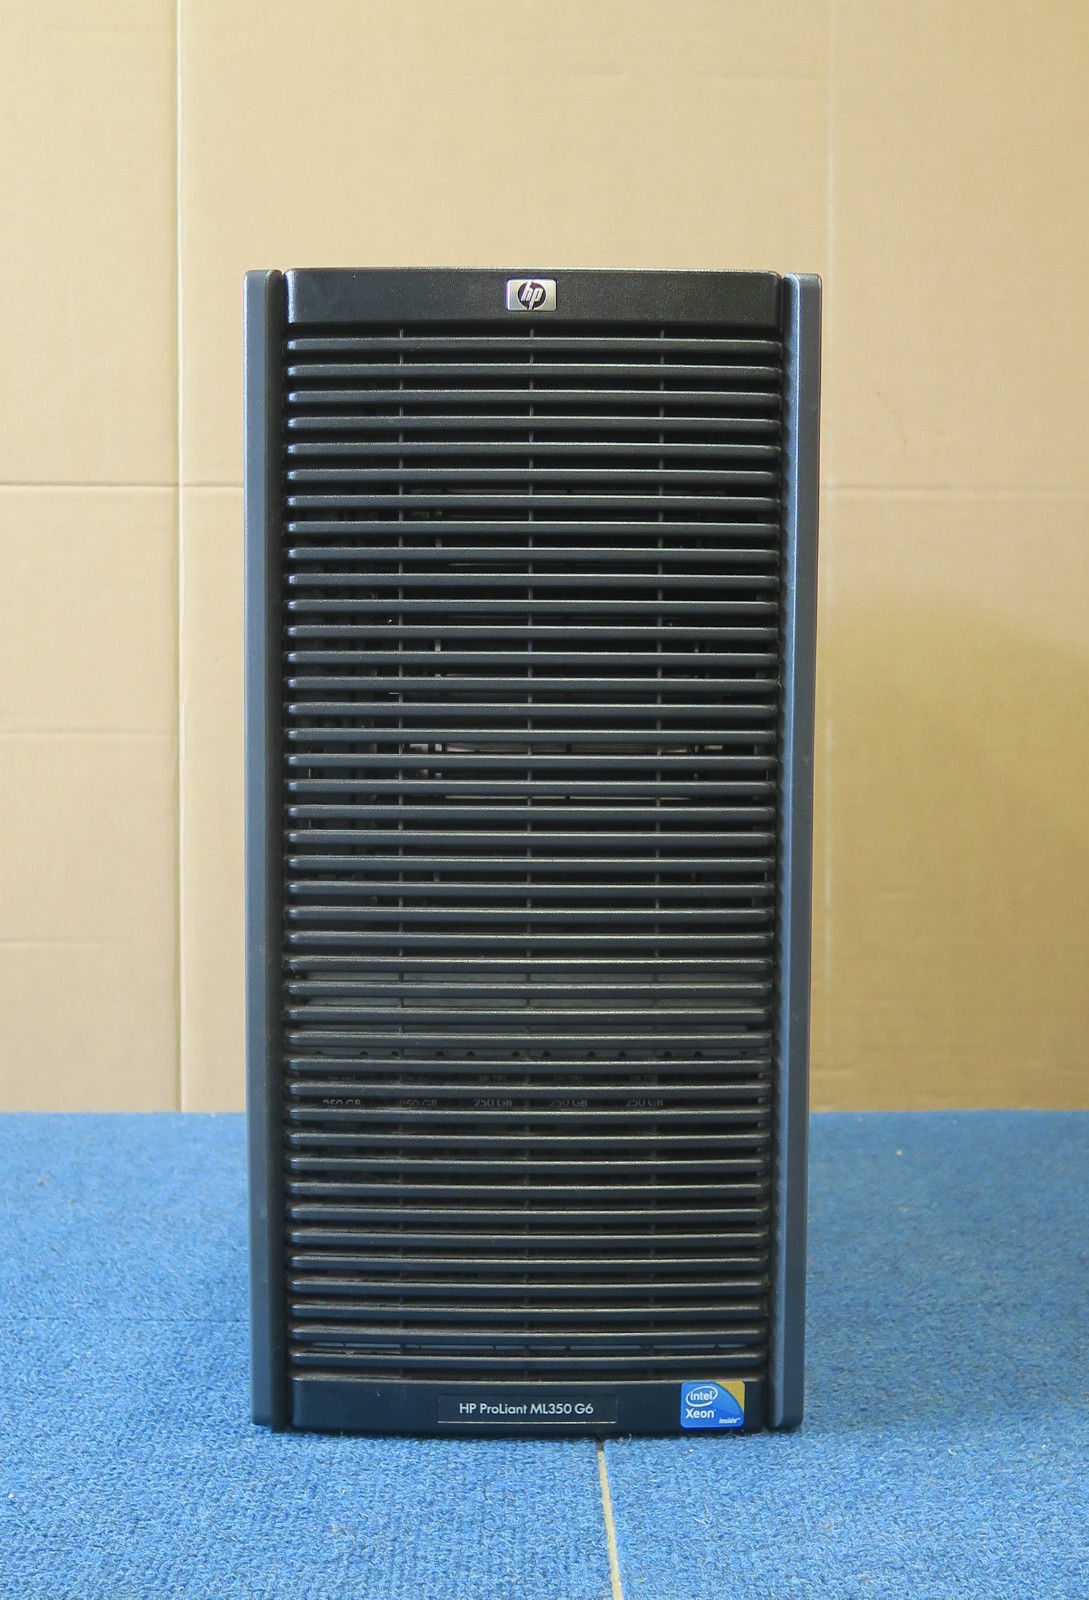 HP Proliant ML350 G6 Xeon Quad Core E5320 1.86GHz 12GB RAM Tower Server